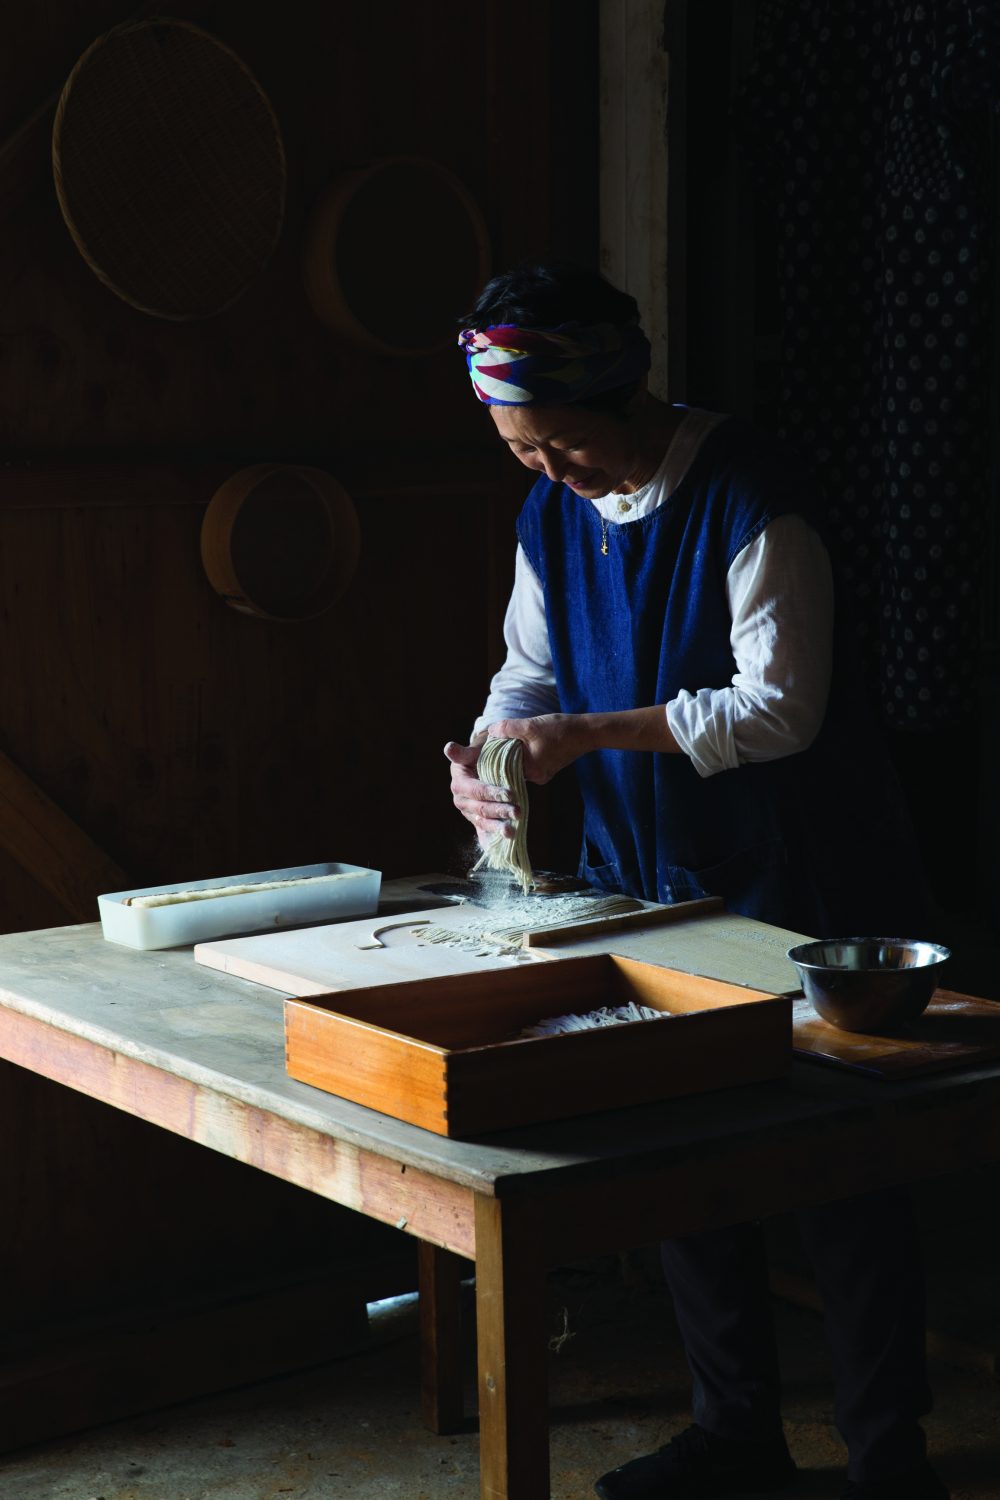 Inside the Incredible World of Japanese Cooking with Sonoko Sakai